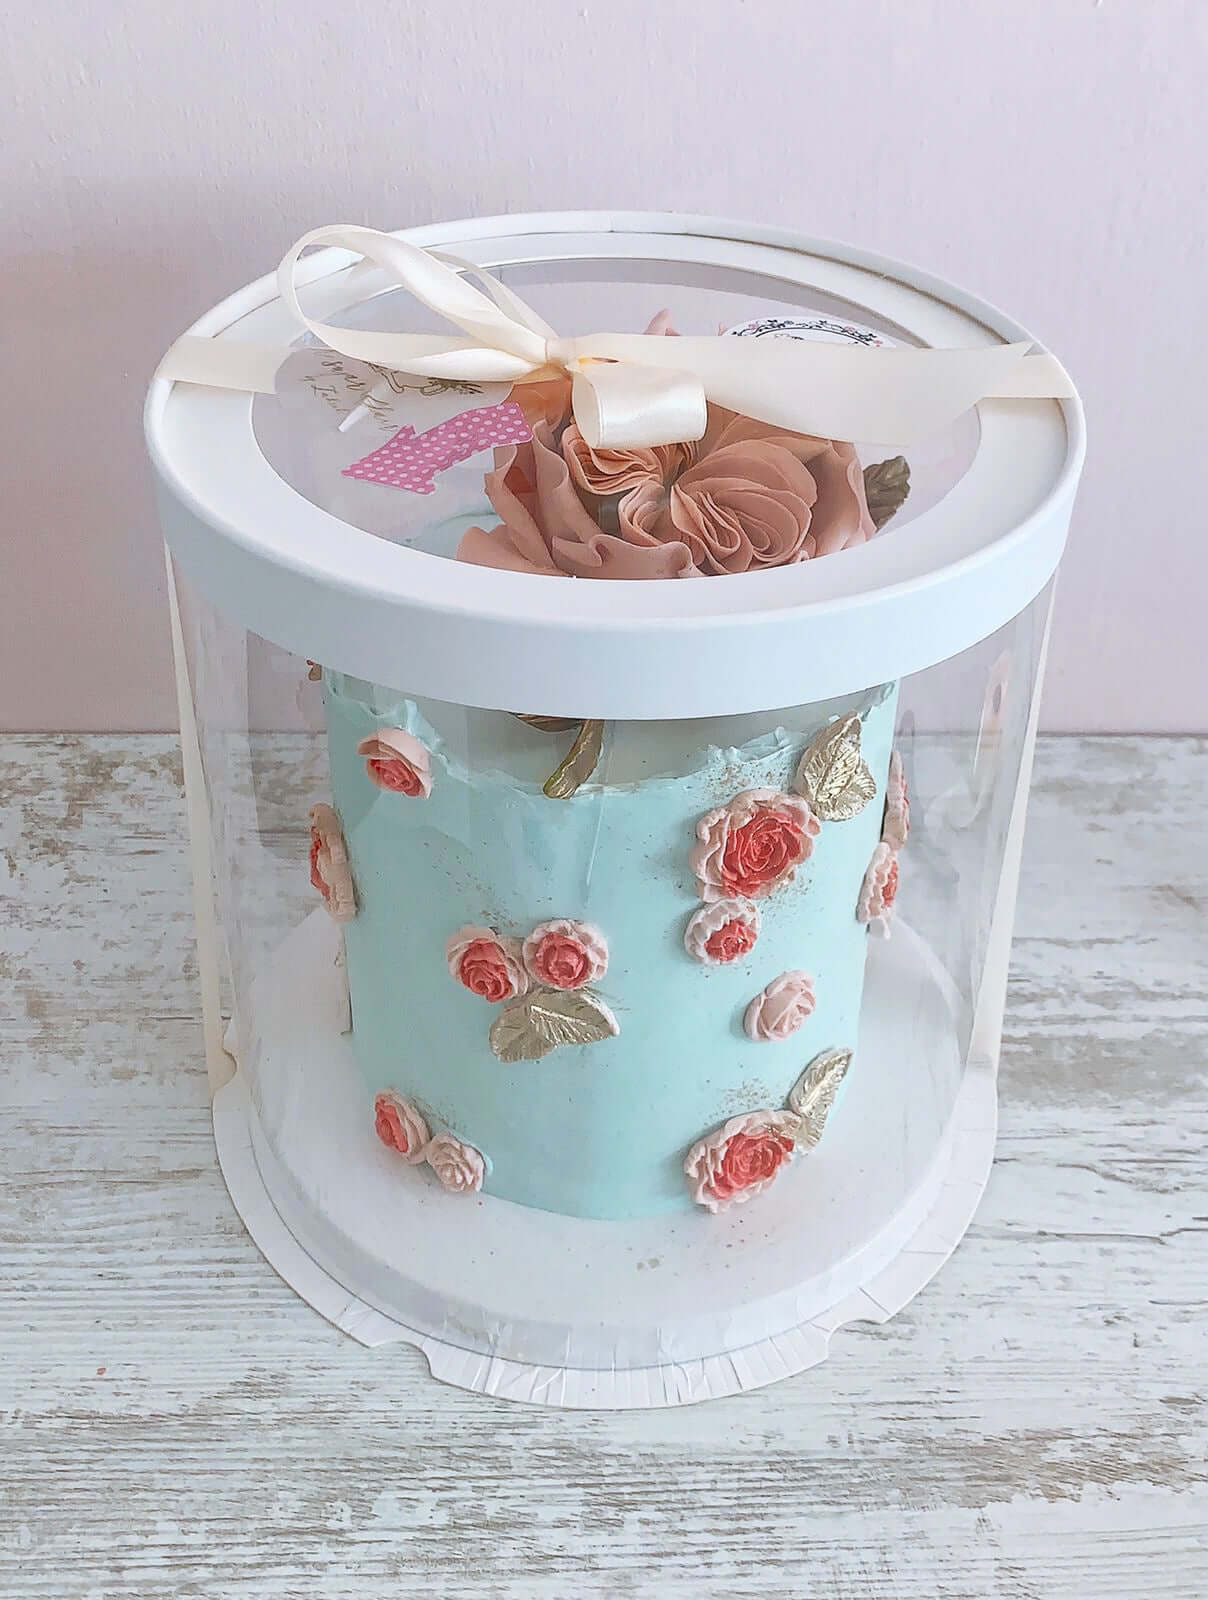 Vintage Floral Cake - Birthday Cake